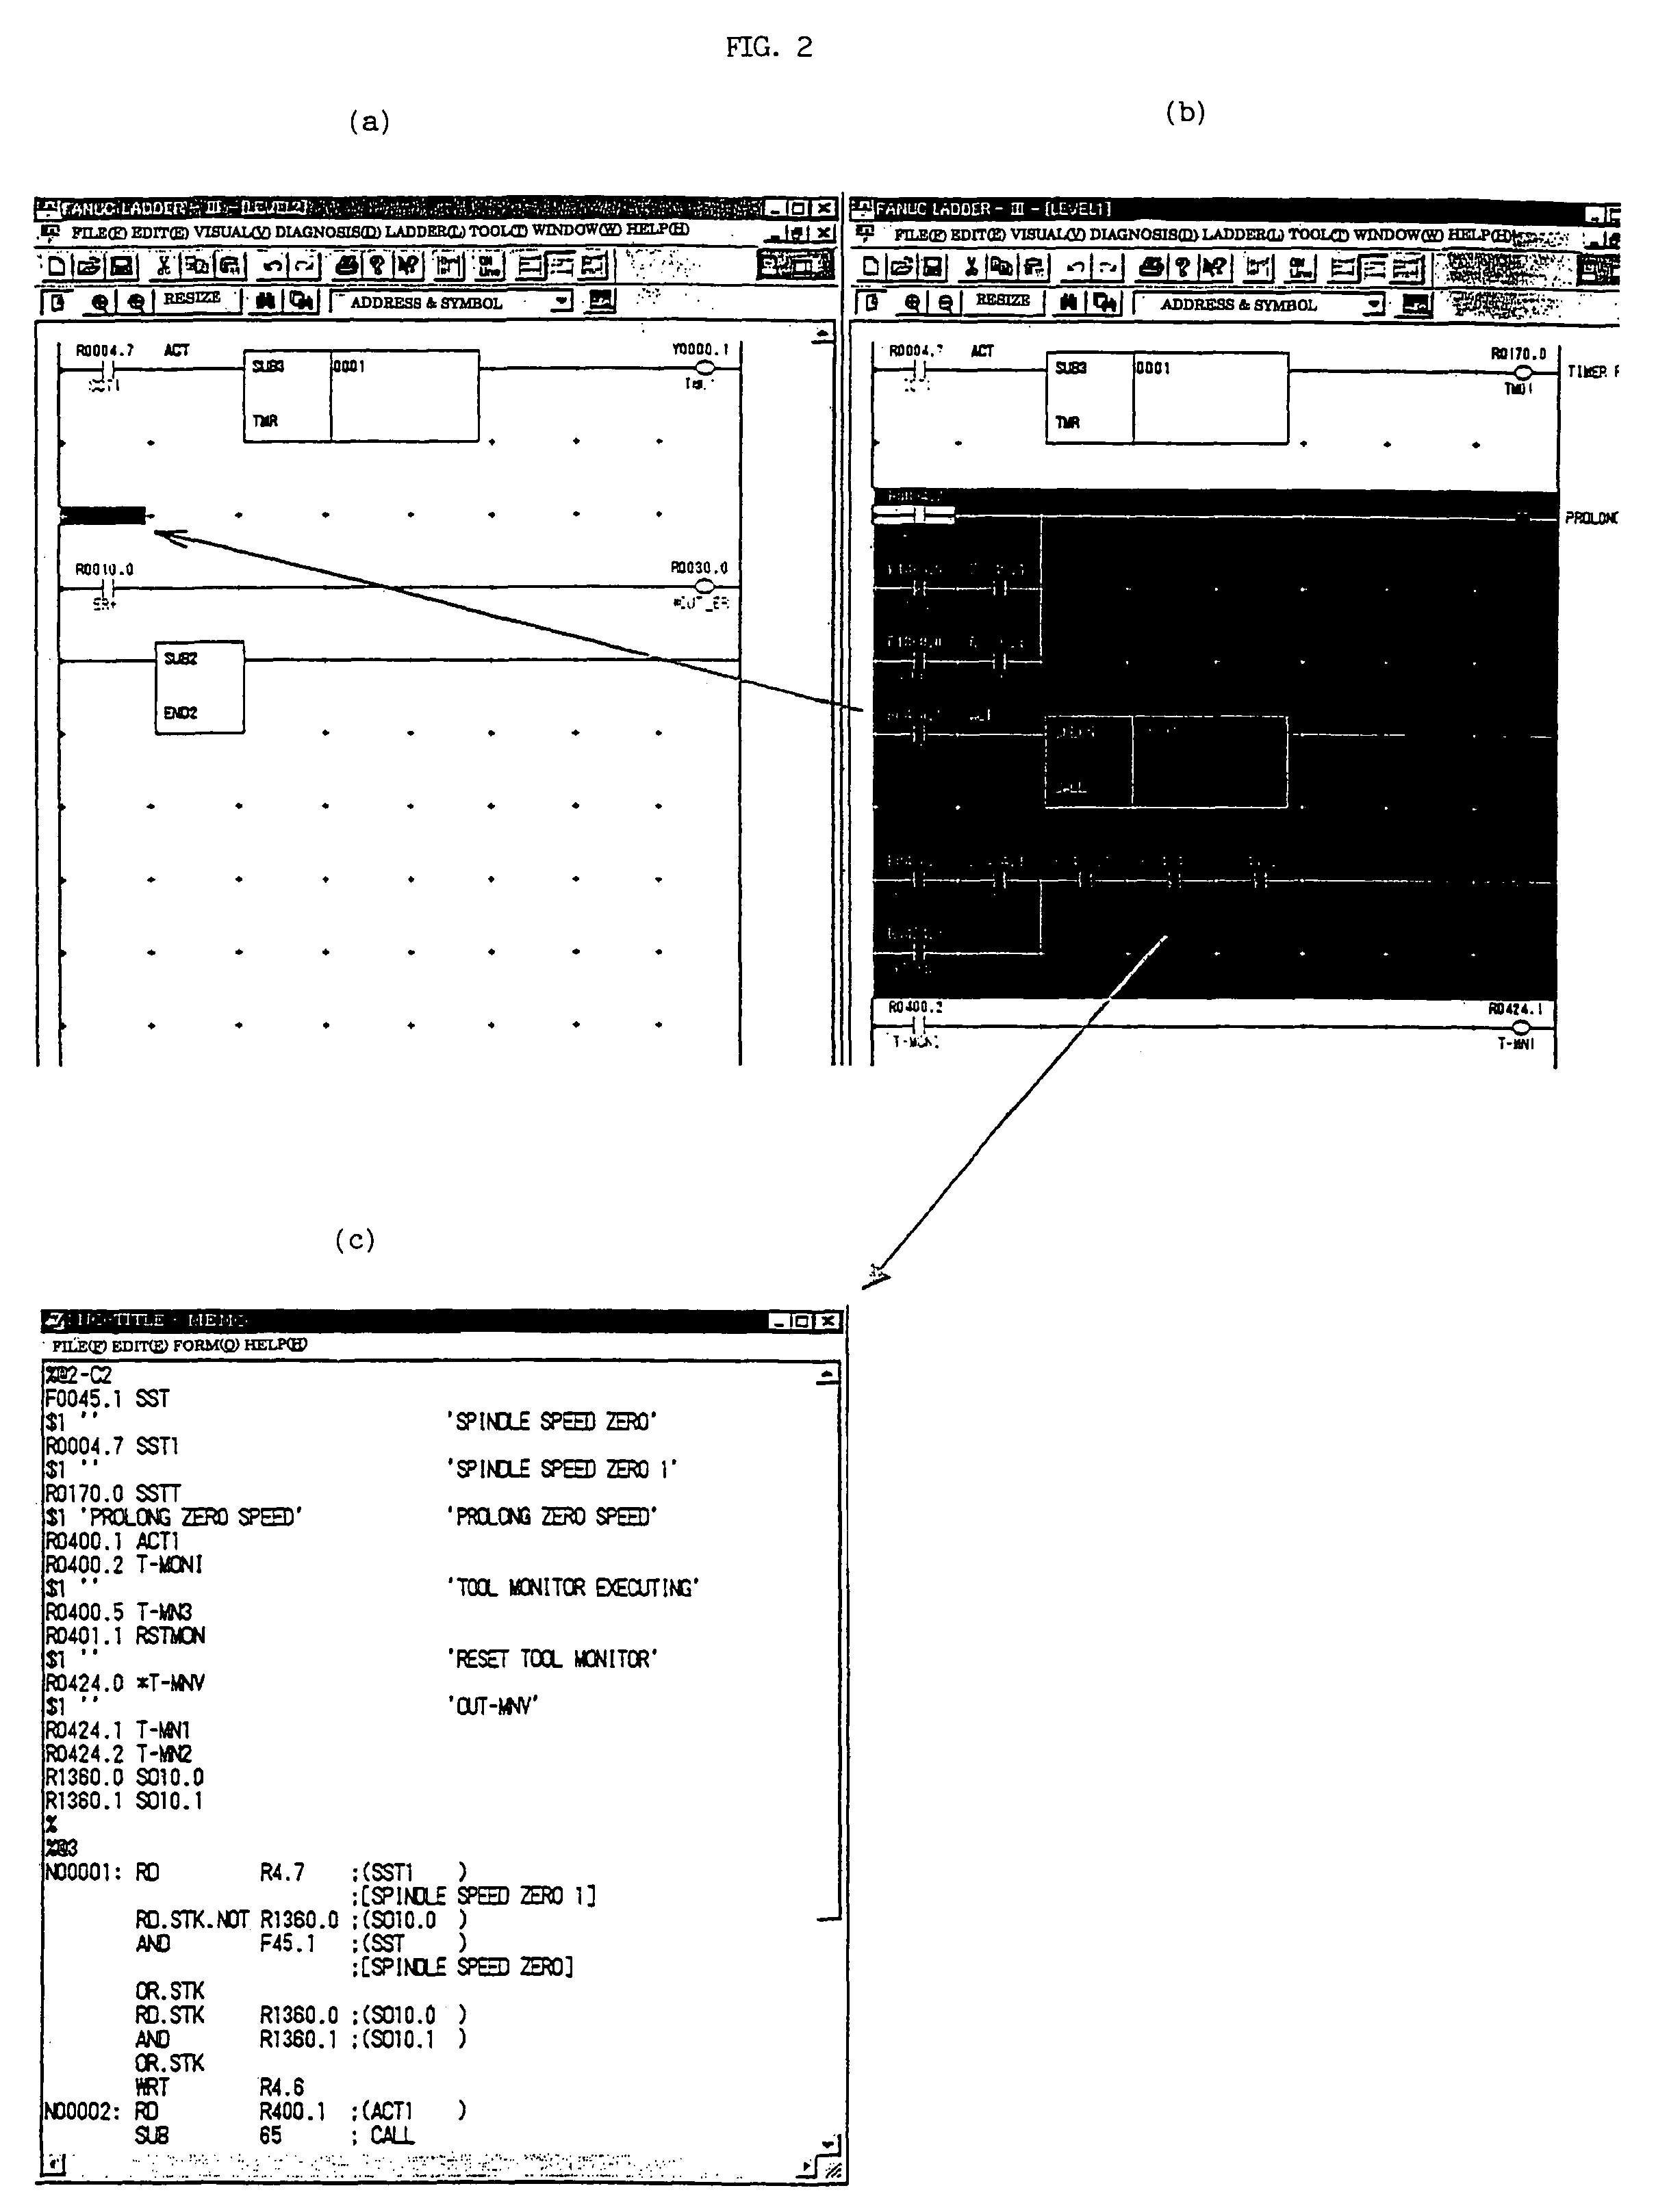 Sequence program editing apparatus